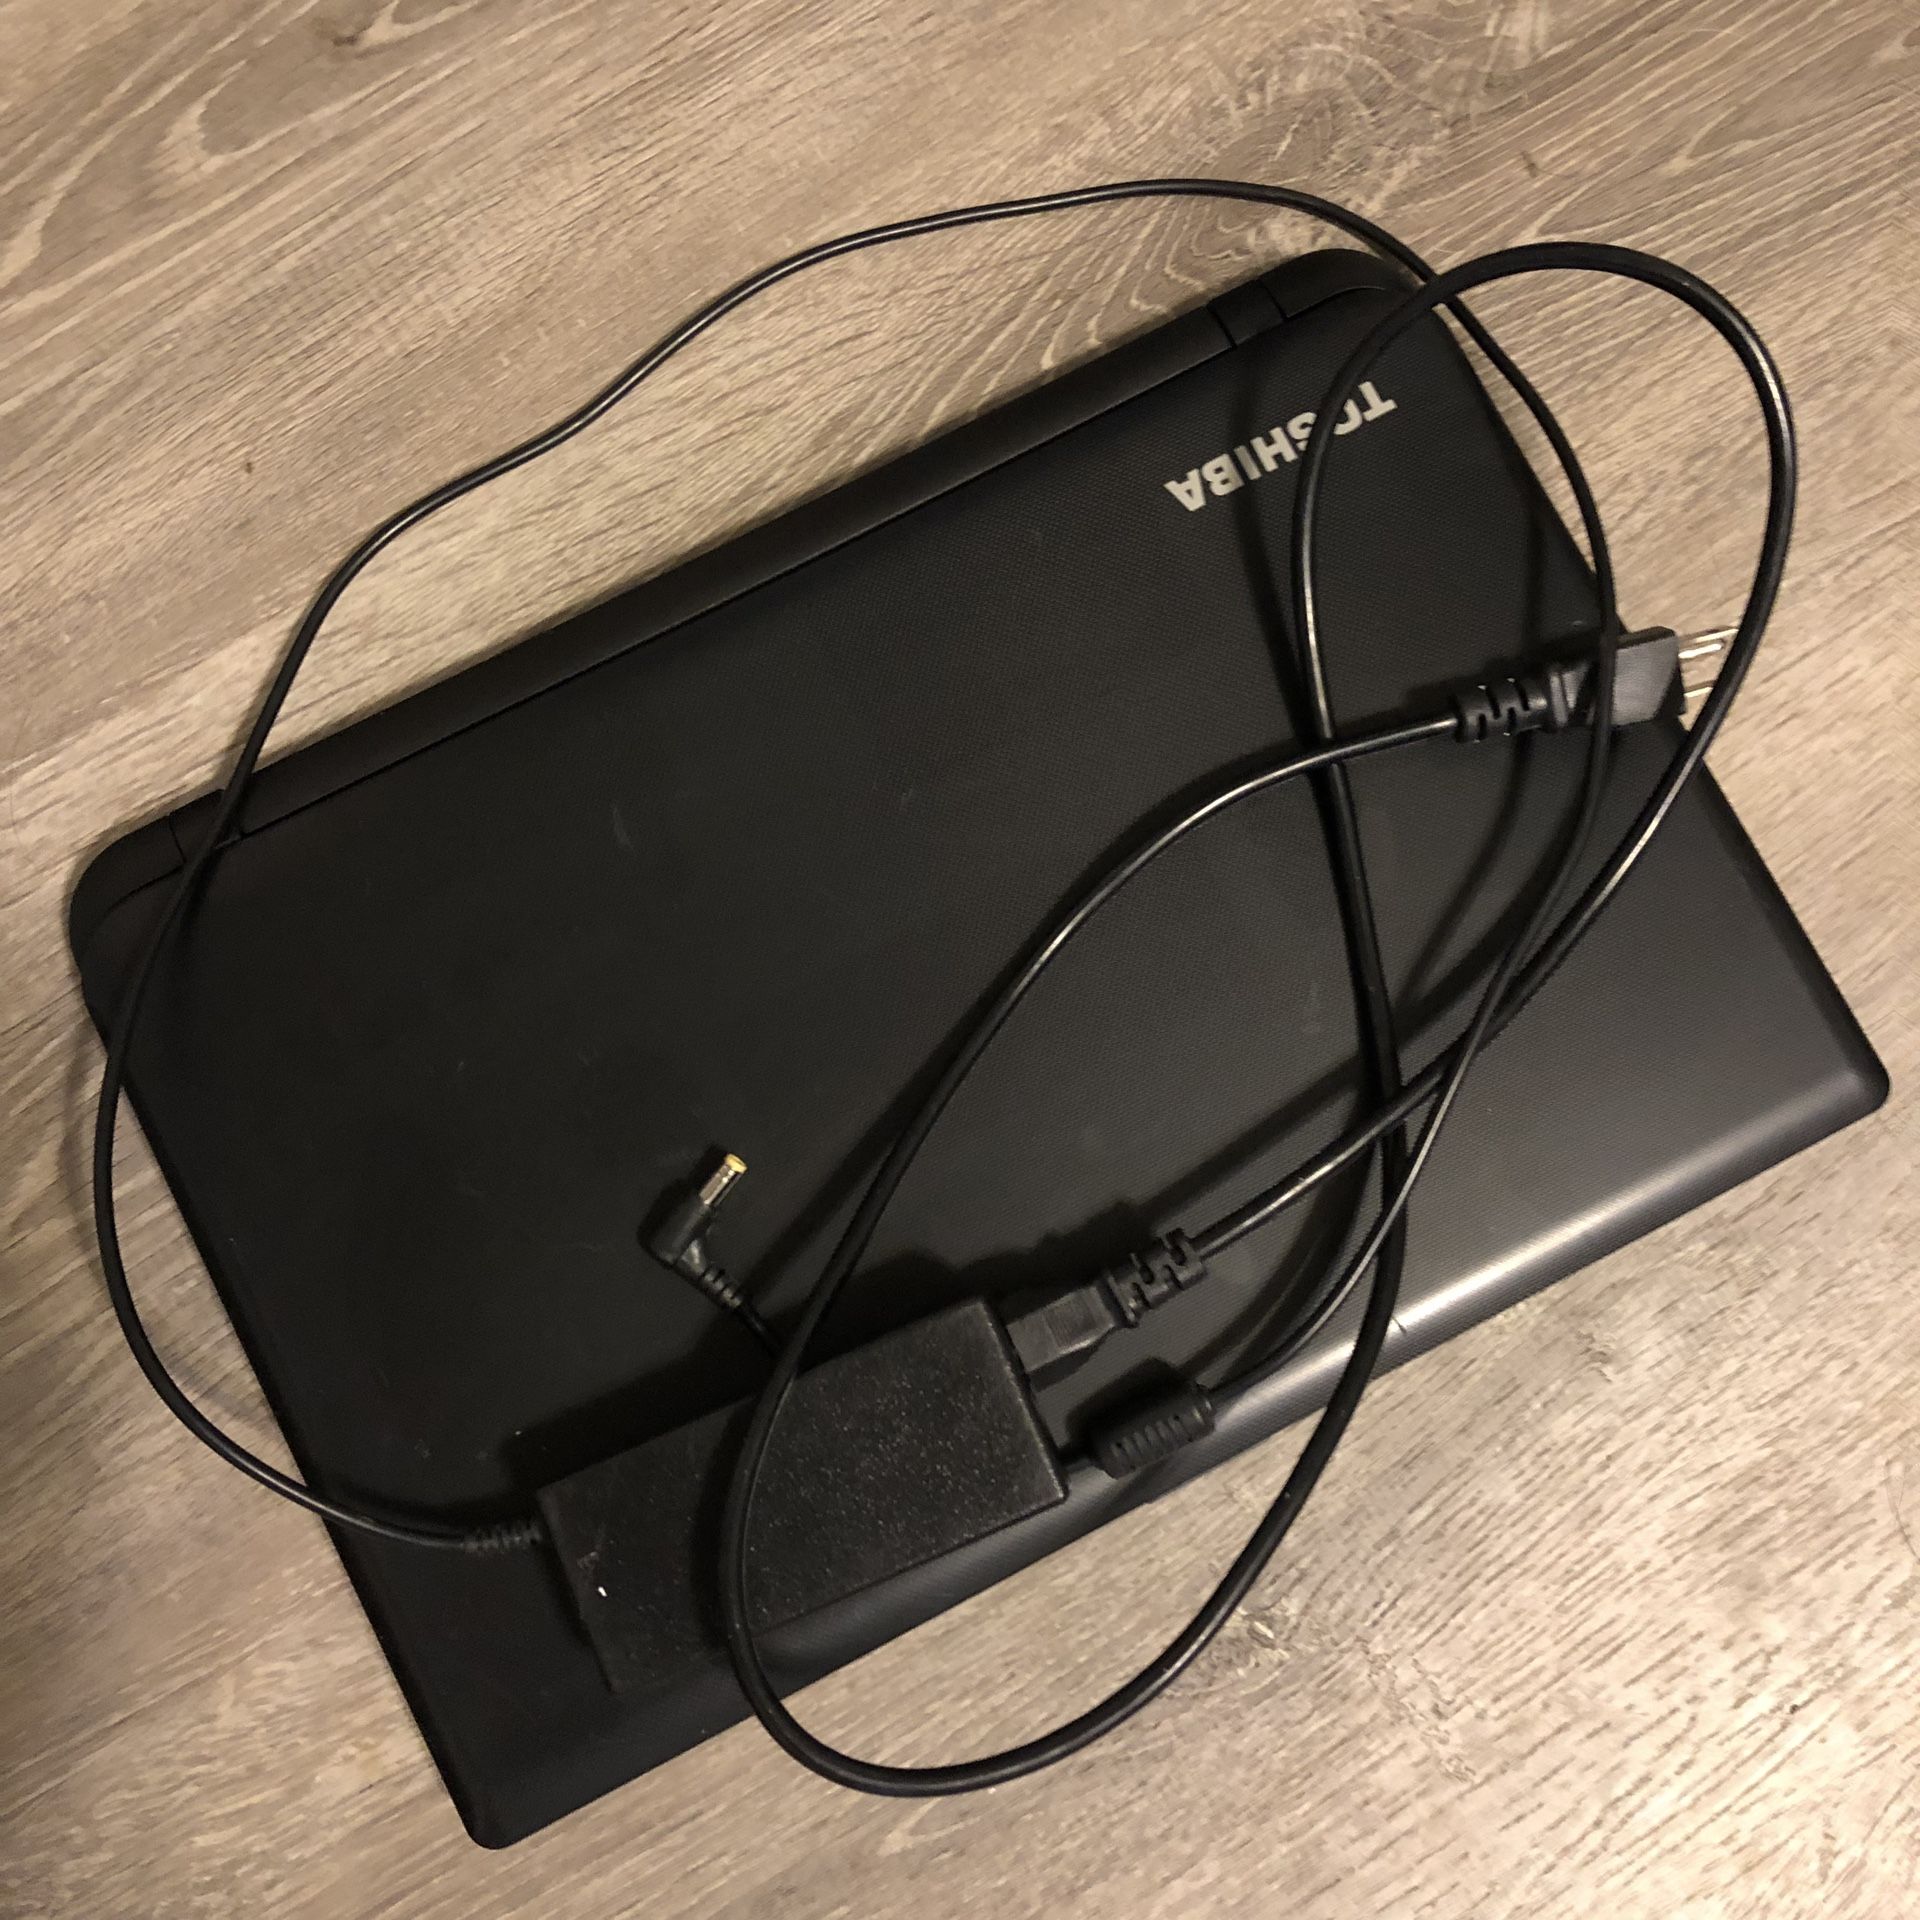 Toshiba 15.6” Laptop 500gb